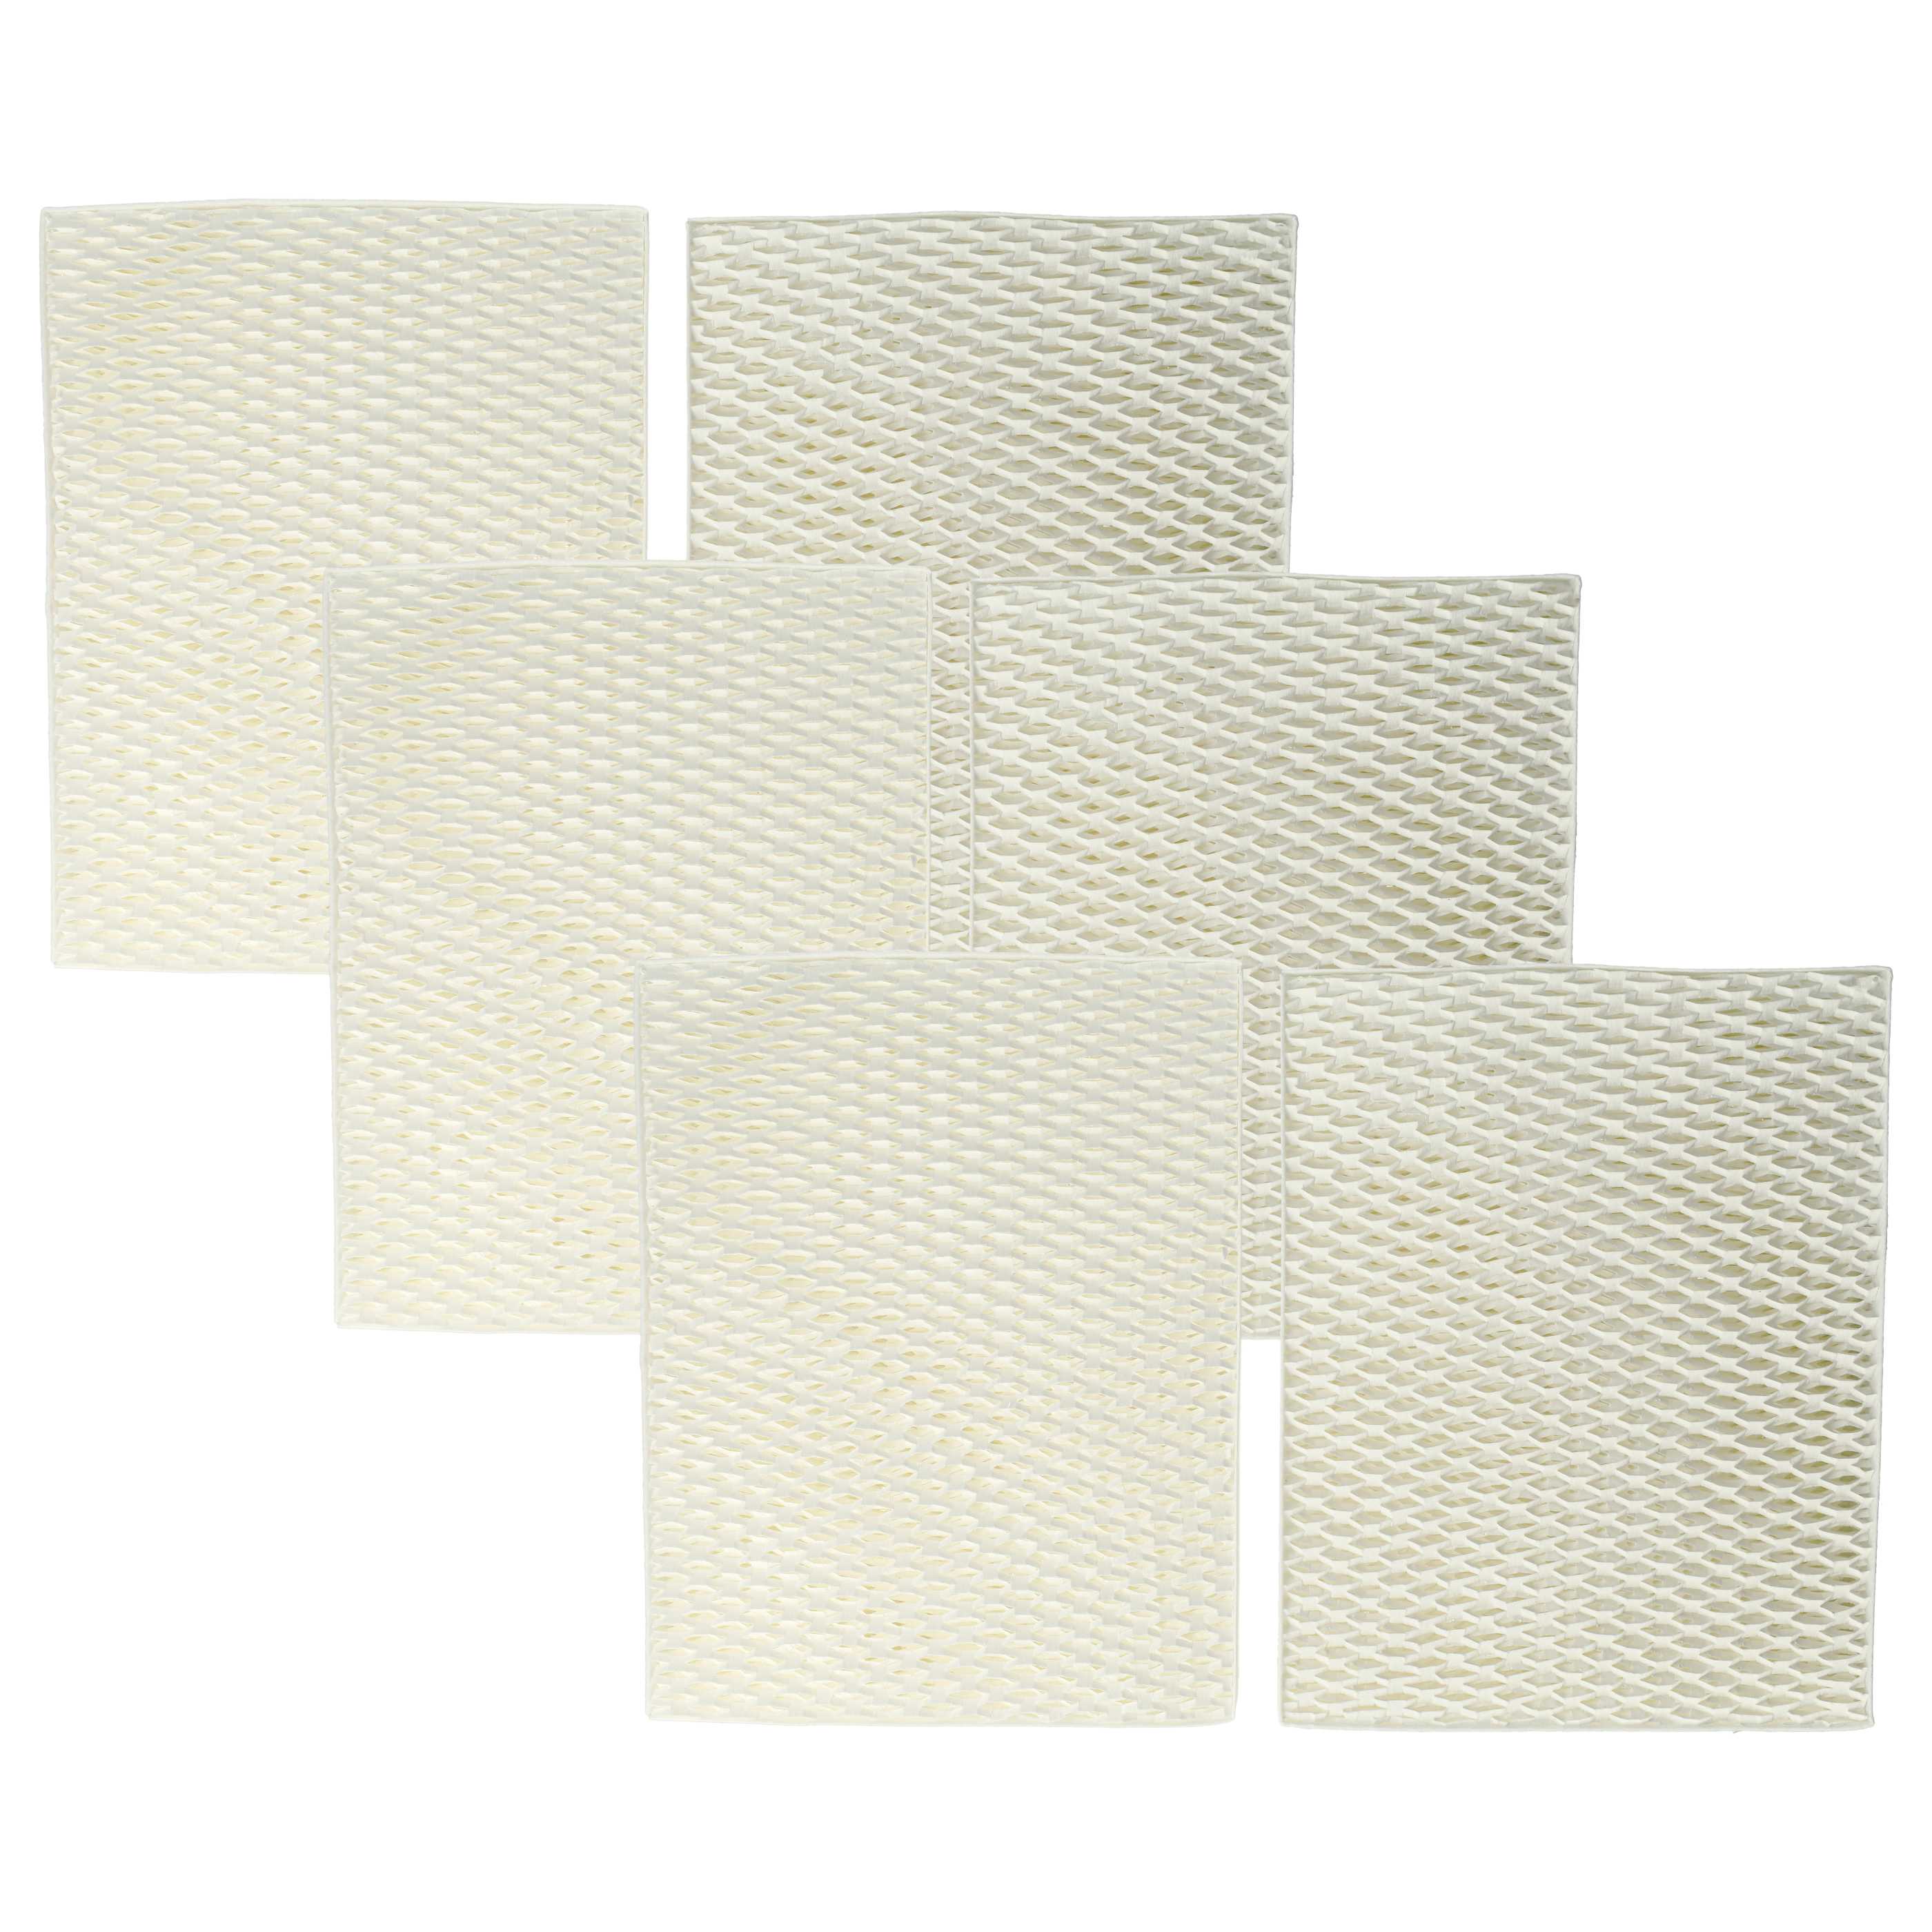 6x Filtro reemplaza Stadler Form 10004, 14643/10 para humidificador - papel